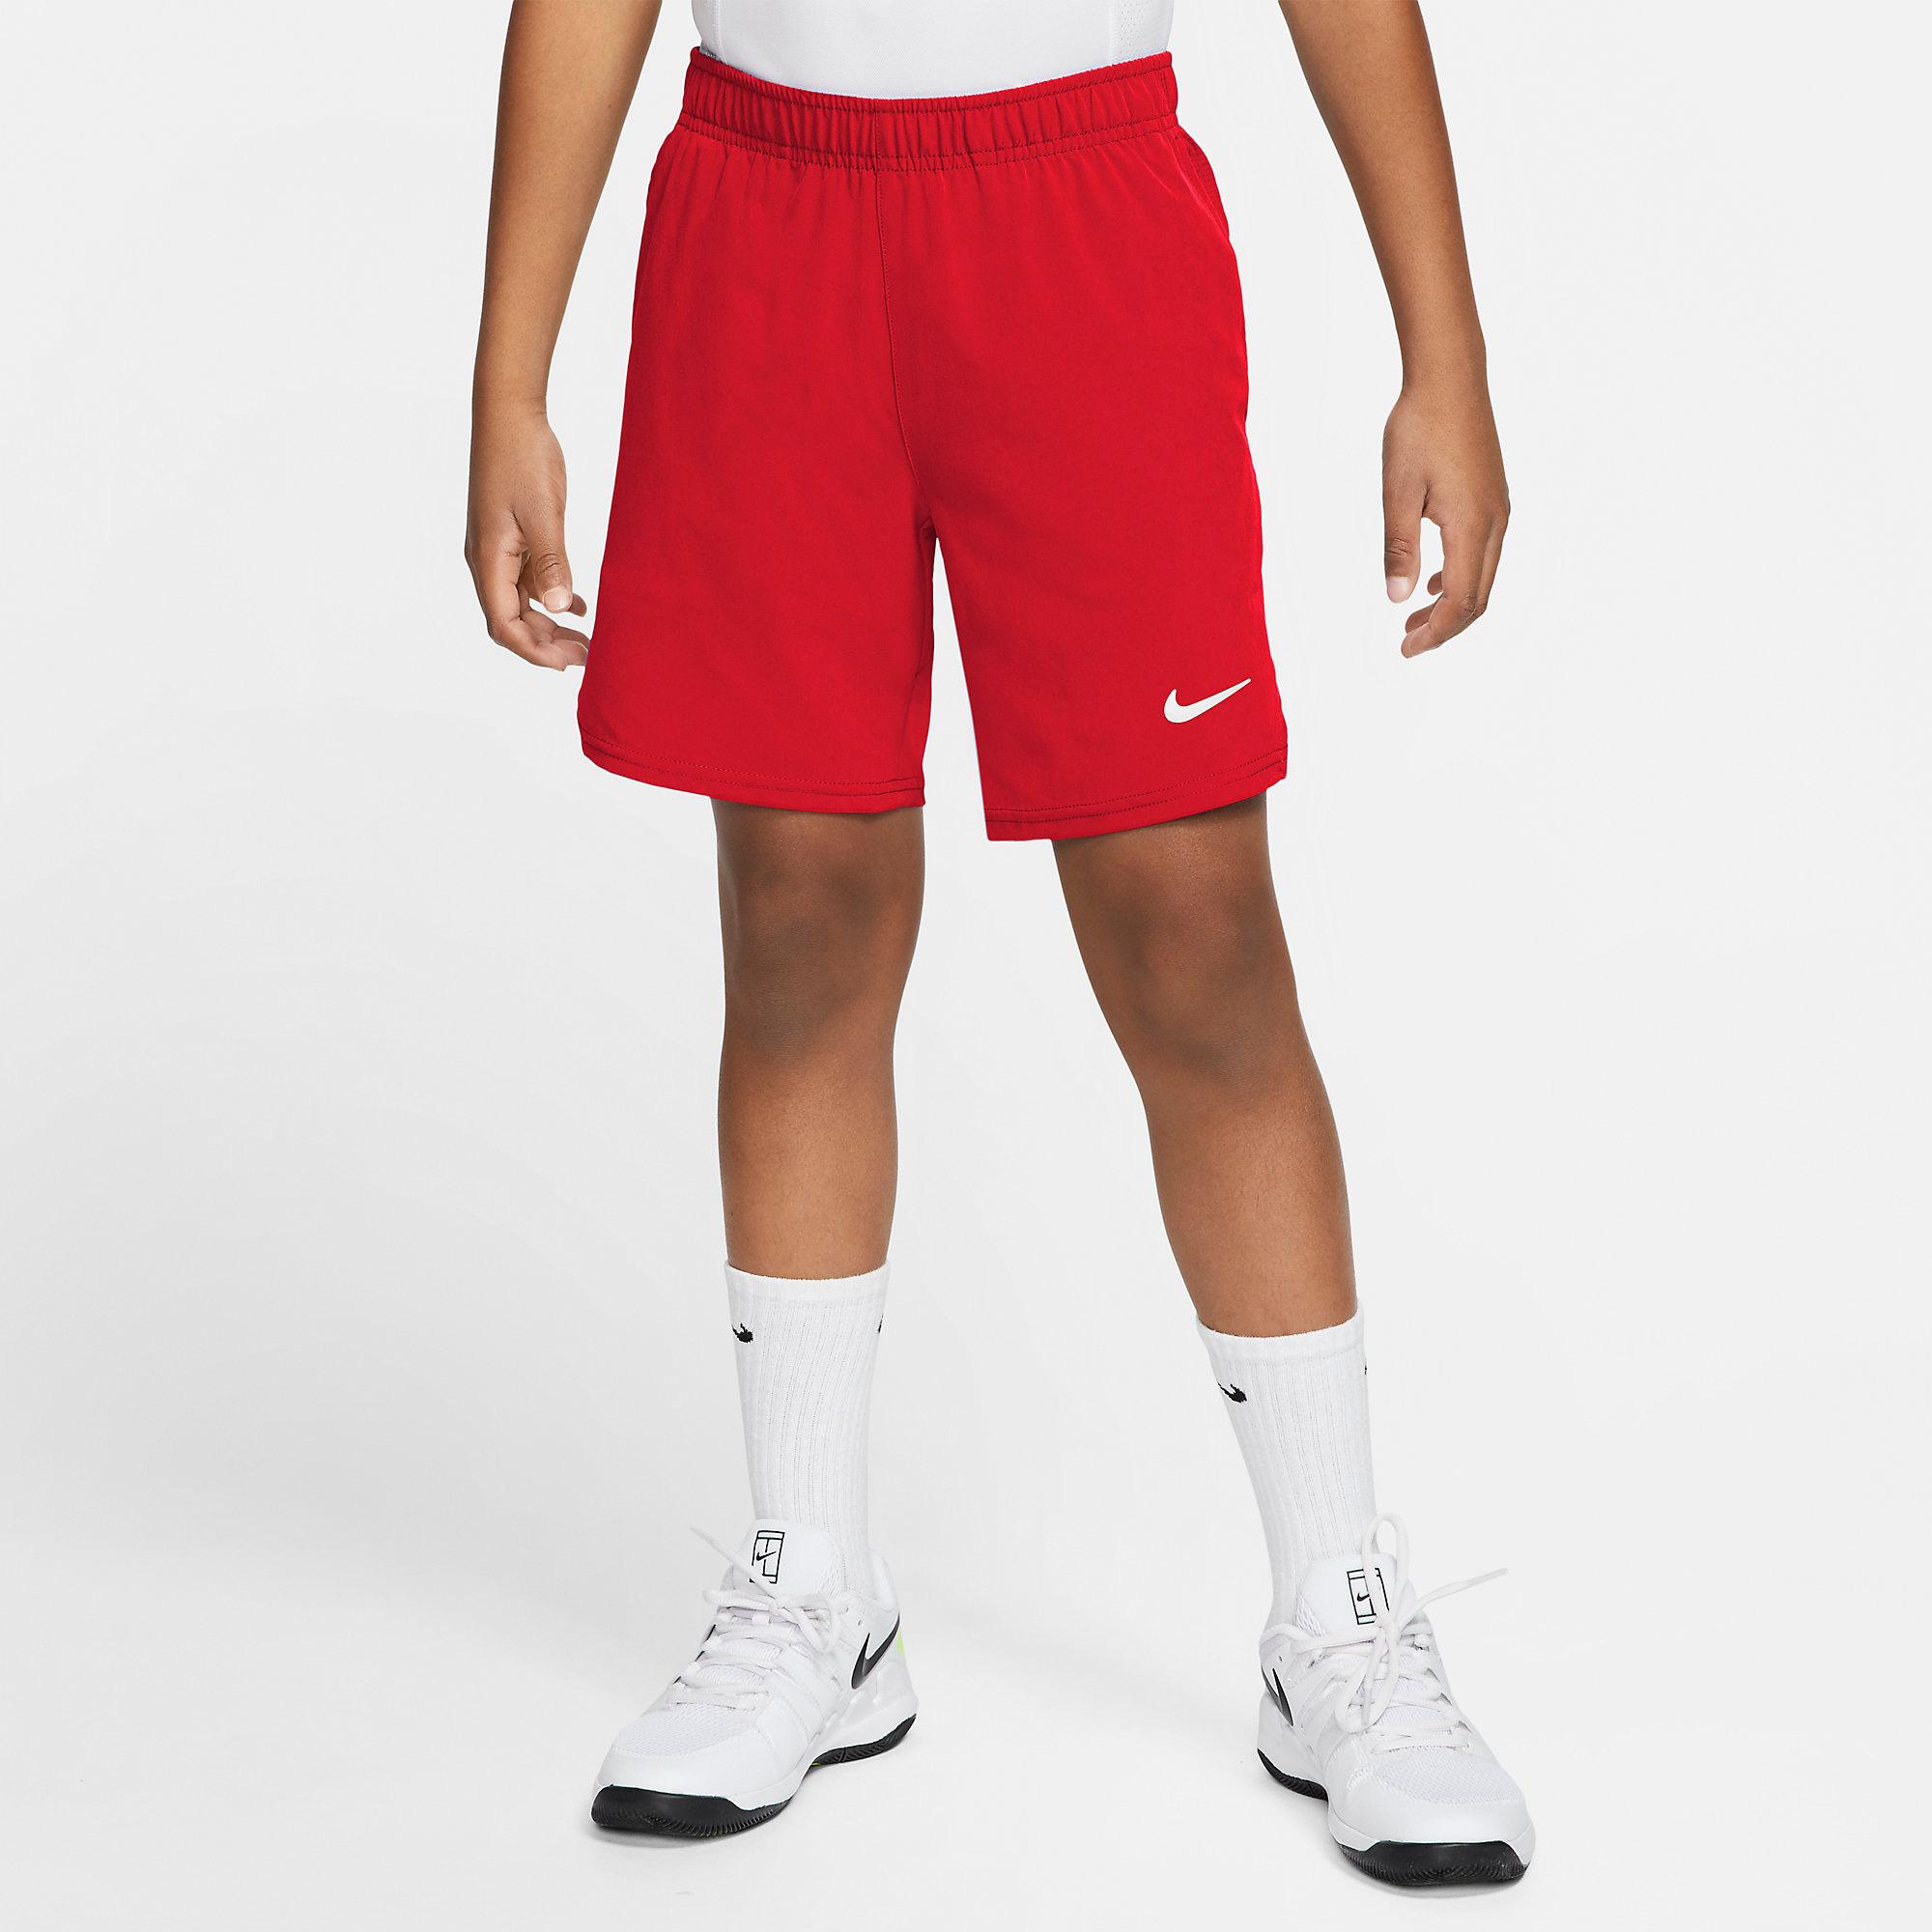 Nike Boys Flex Ace Tennis Shorts - Red - Tennisnuts.com